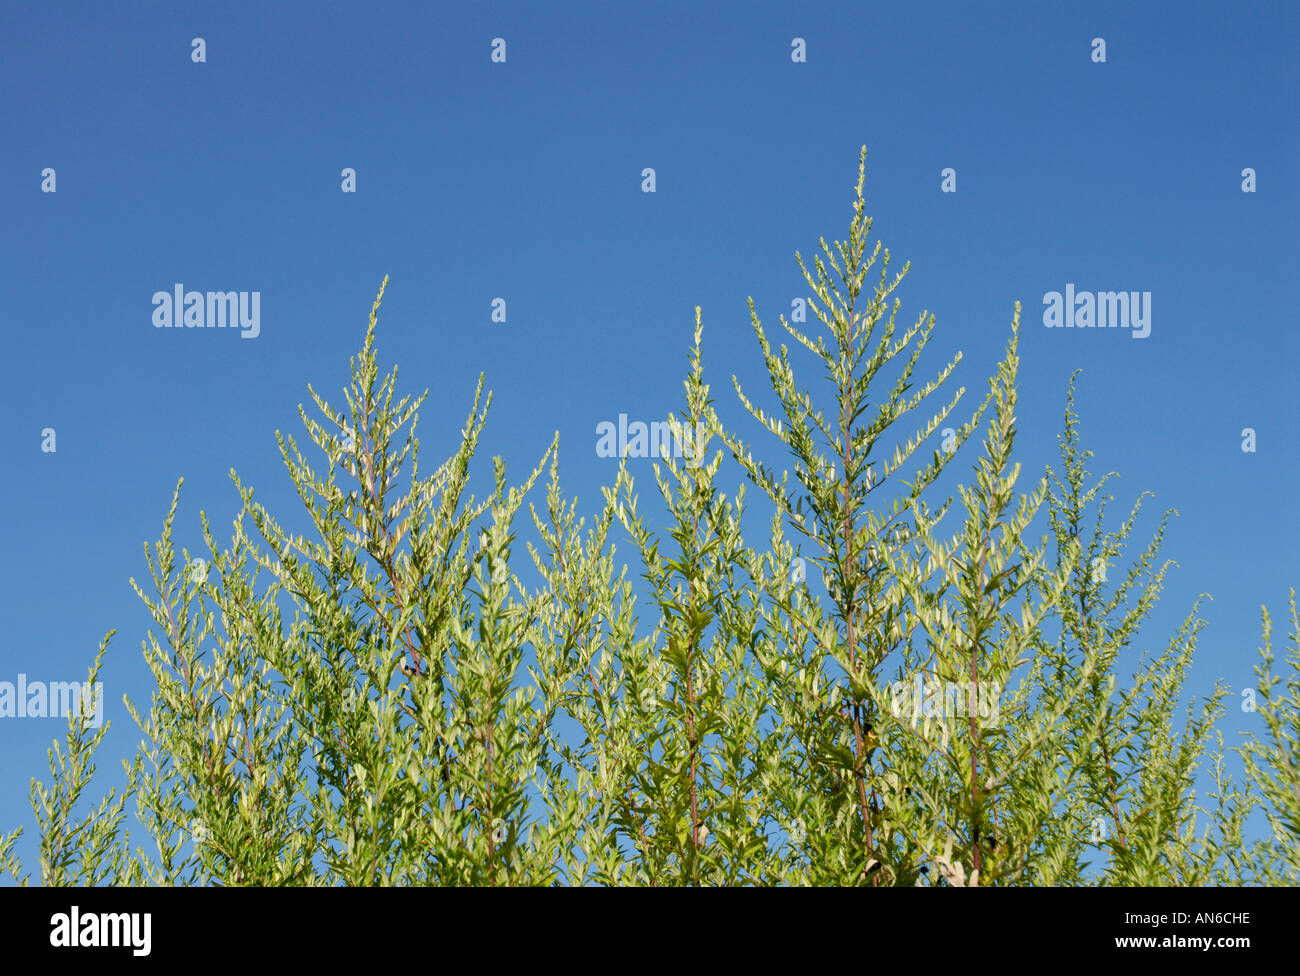 Common ragweed, Ambrosia artemisiifolia, plants against blue sky. Ragweed pollen is a seasonal allergen. Stock Photo